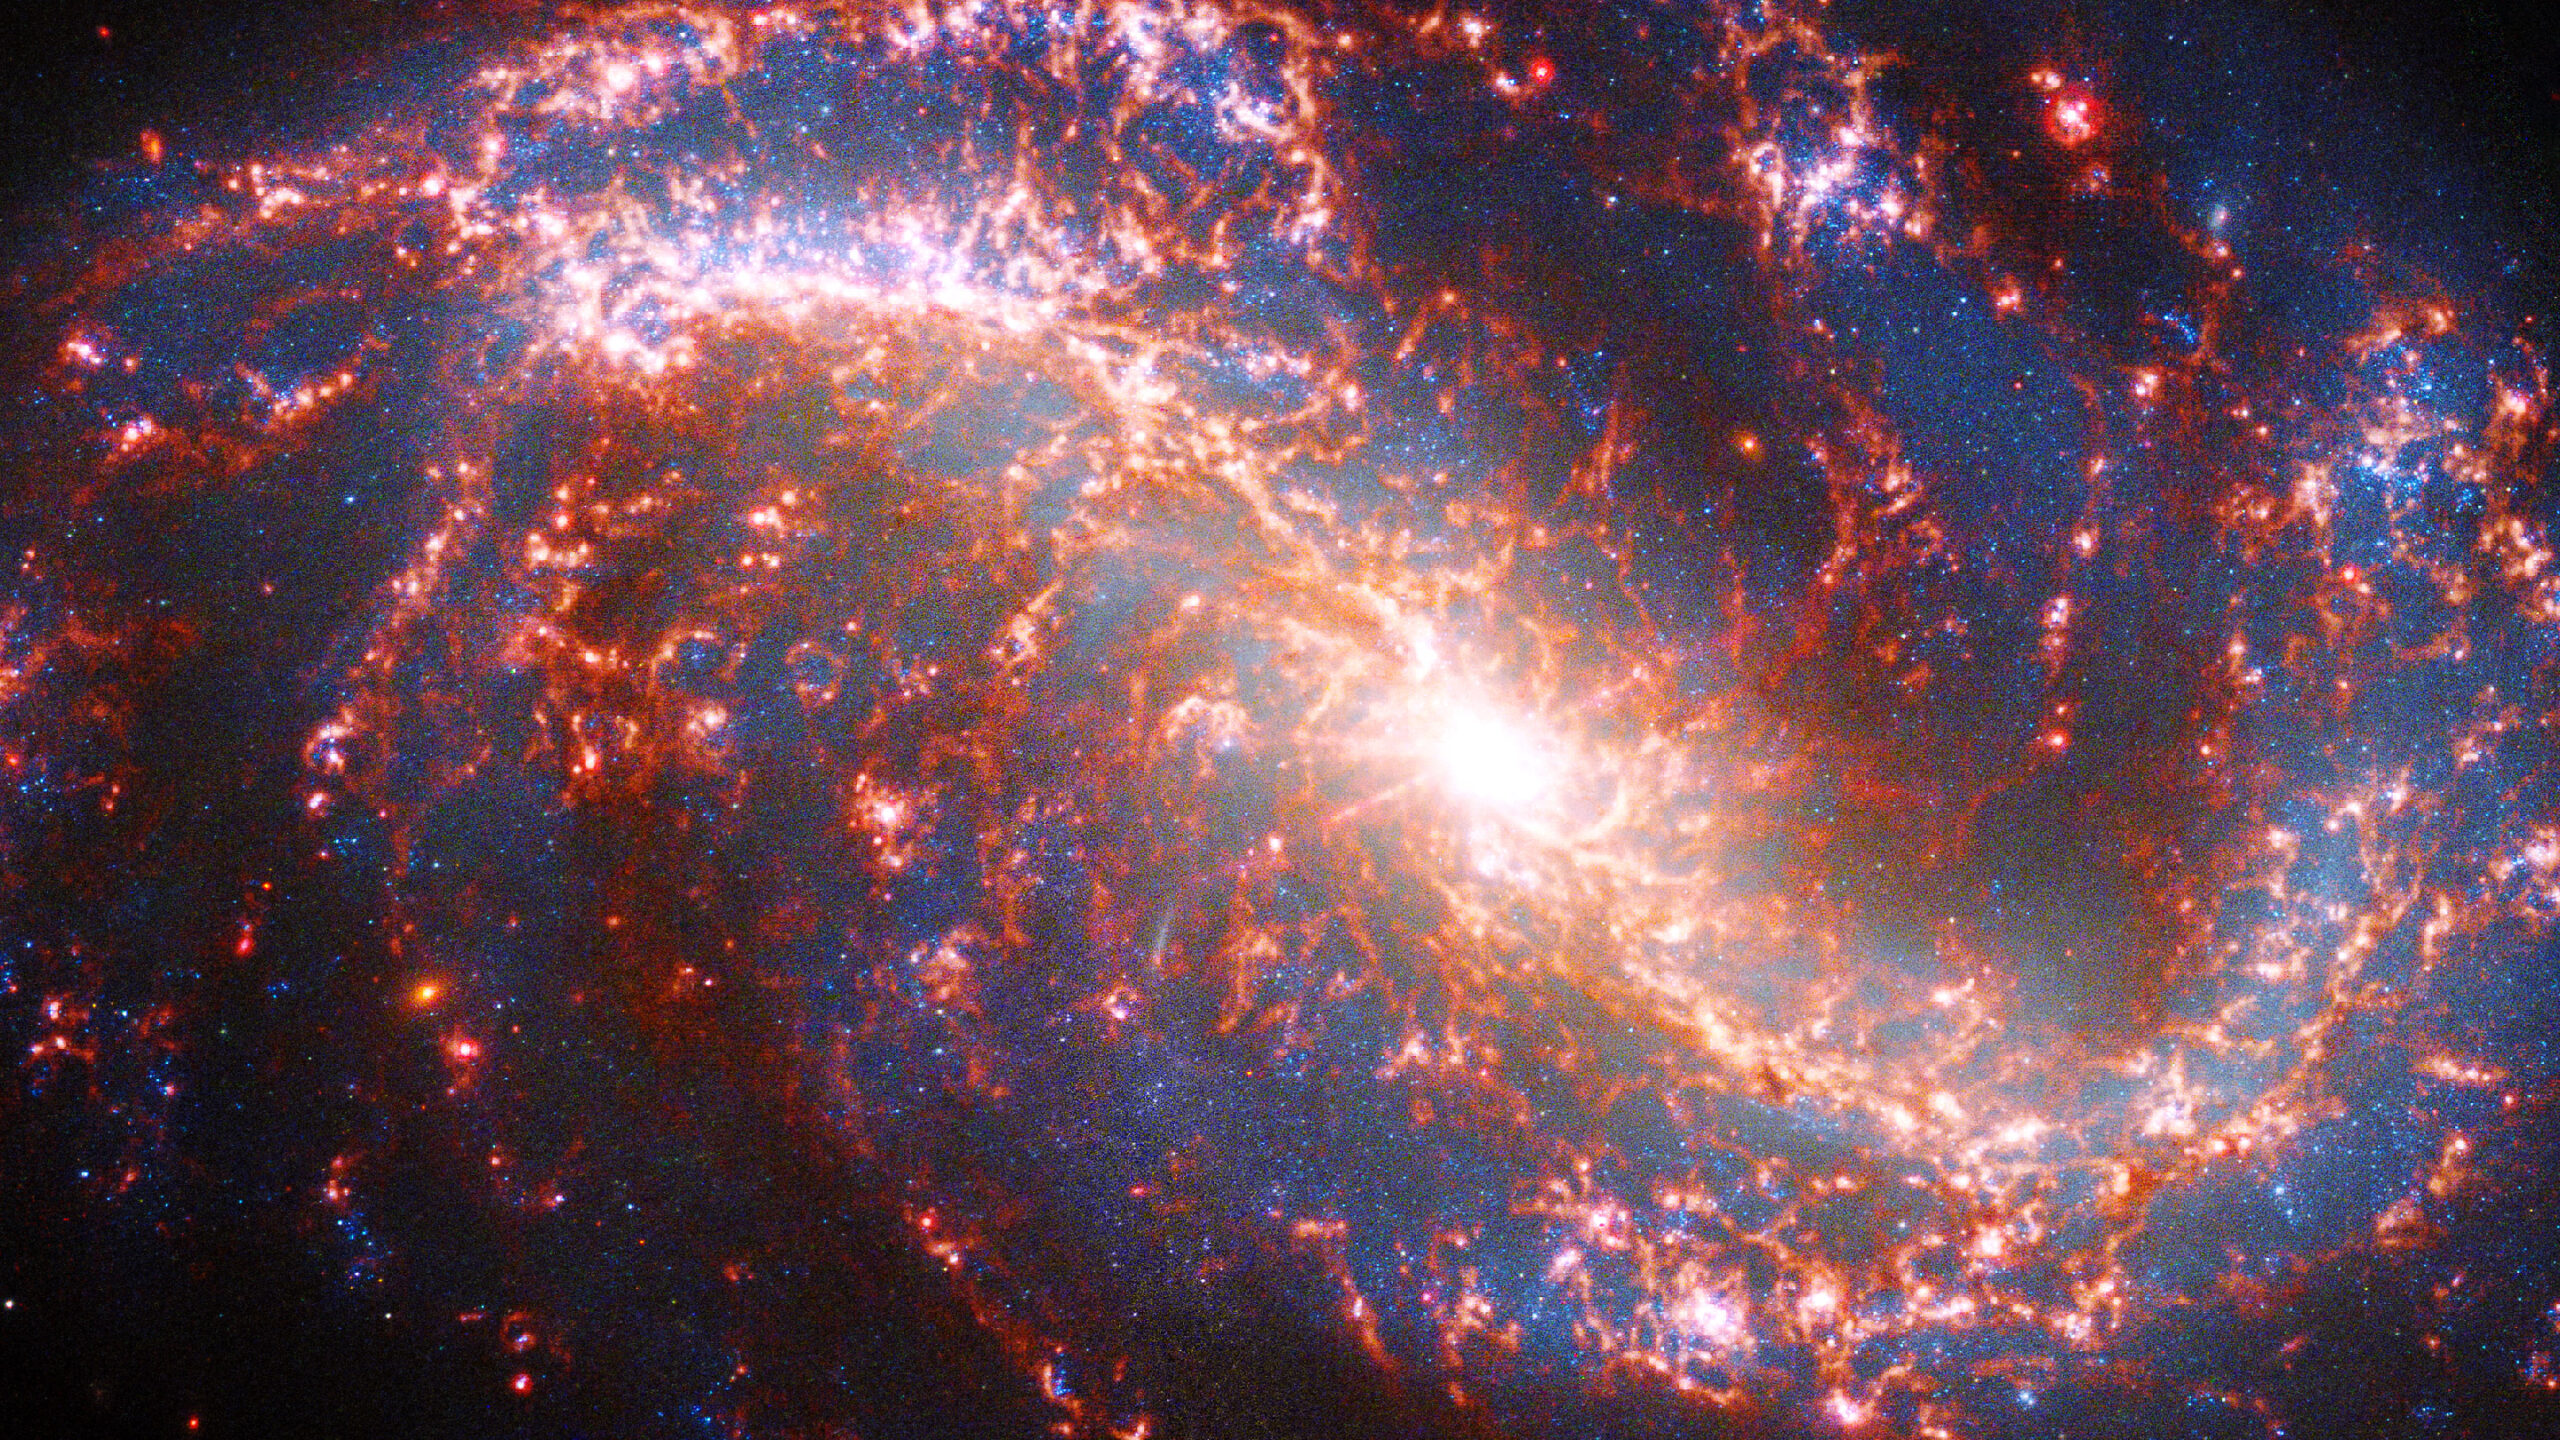 Galaxy NGC 7496